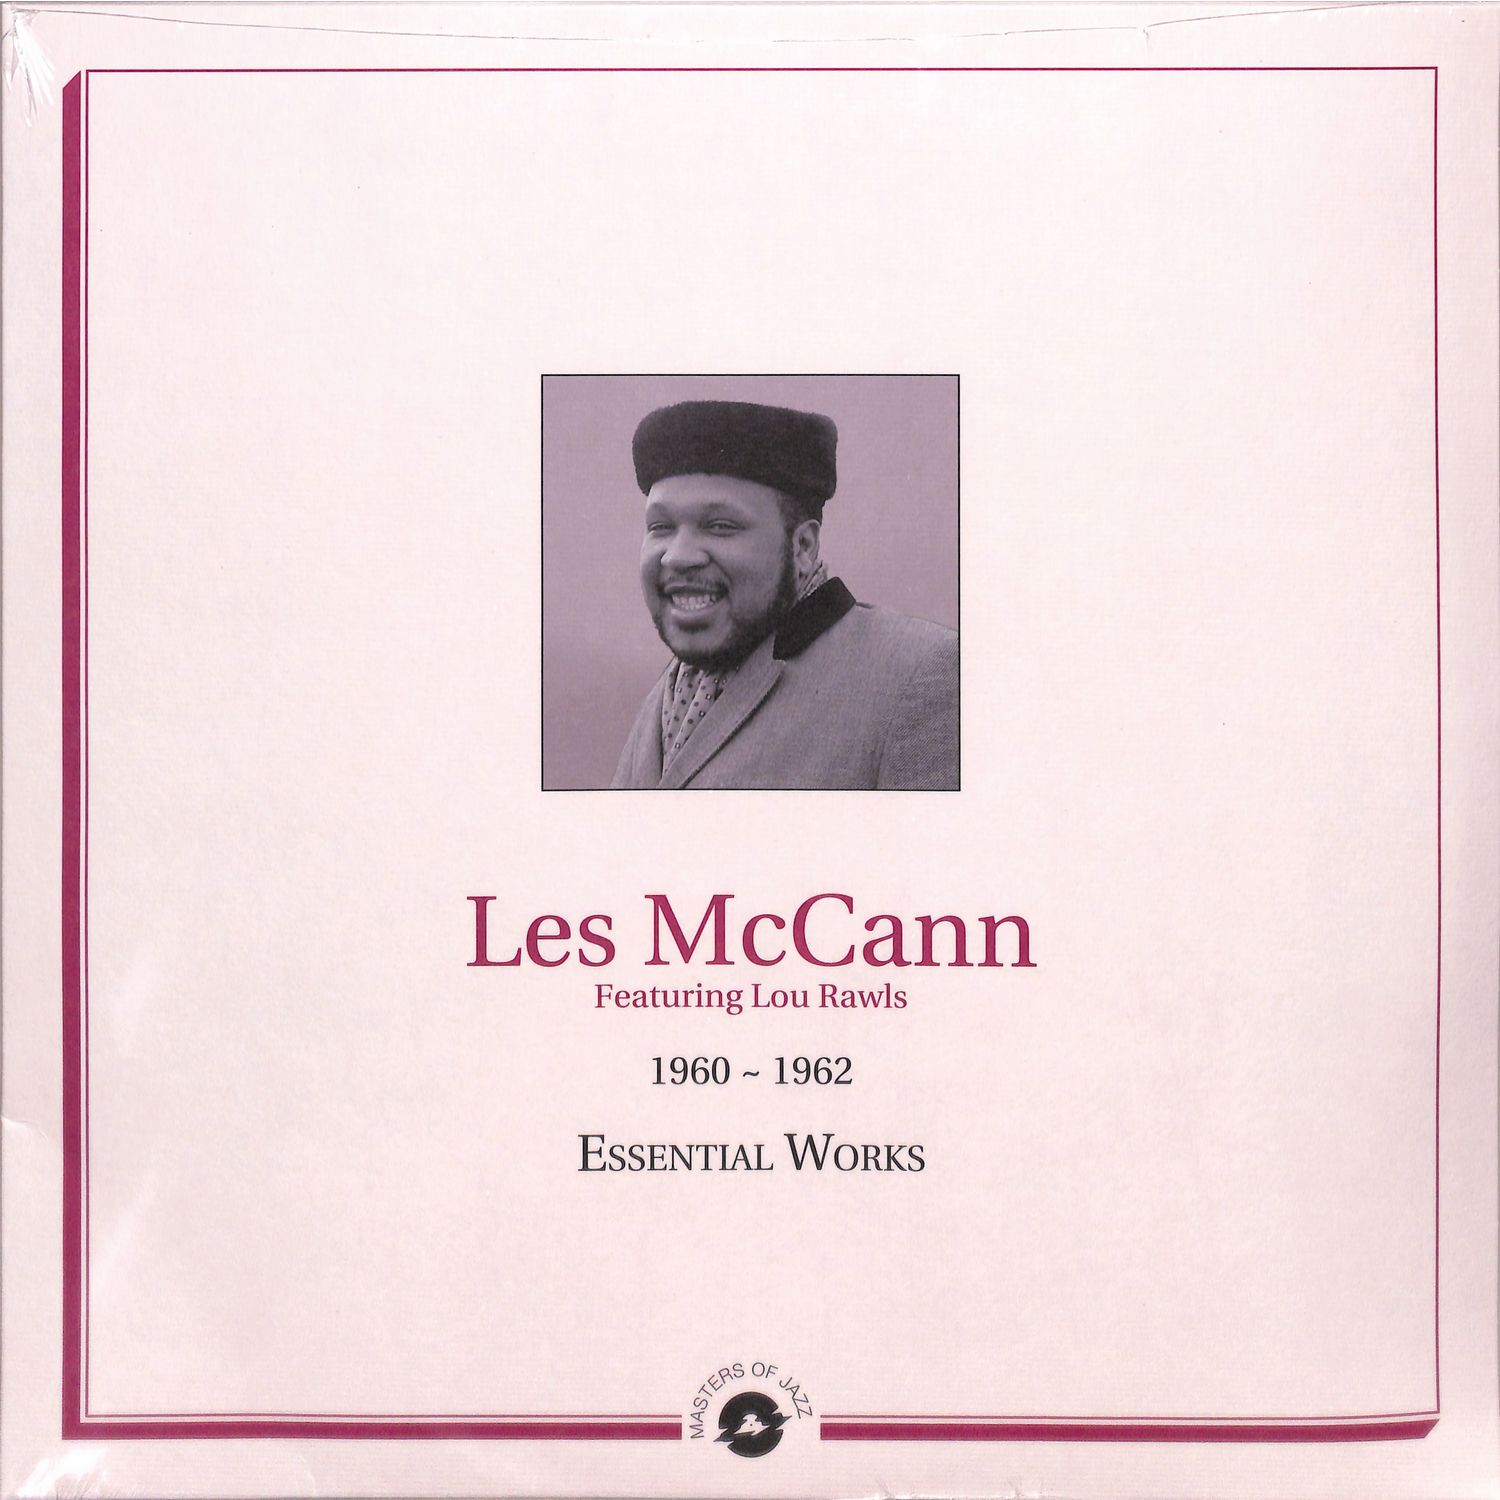 Les McCann featuring Lou Rawls  - ESSENTIAL WORKS 1960-1962 